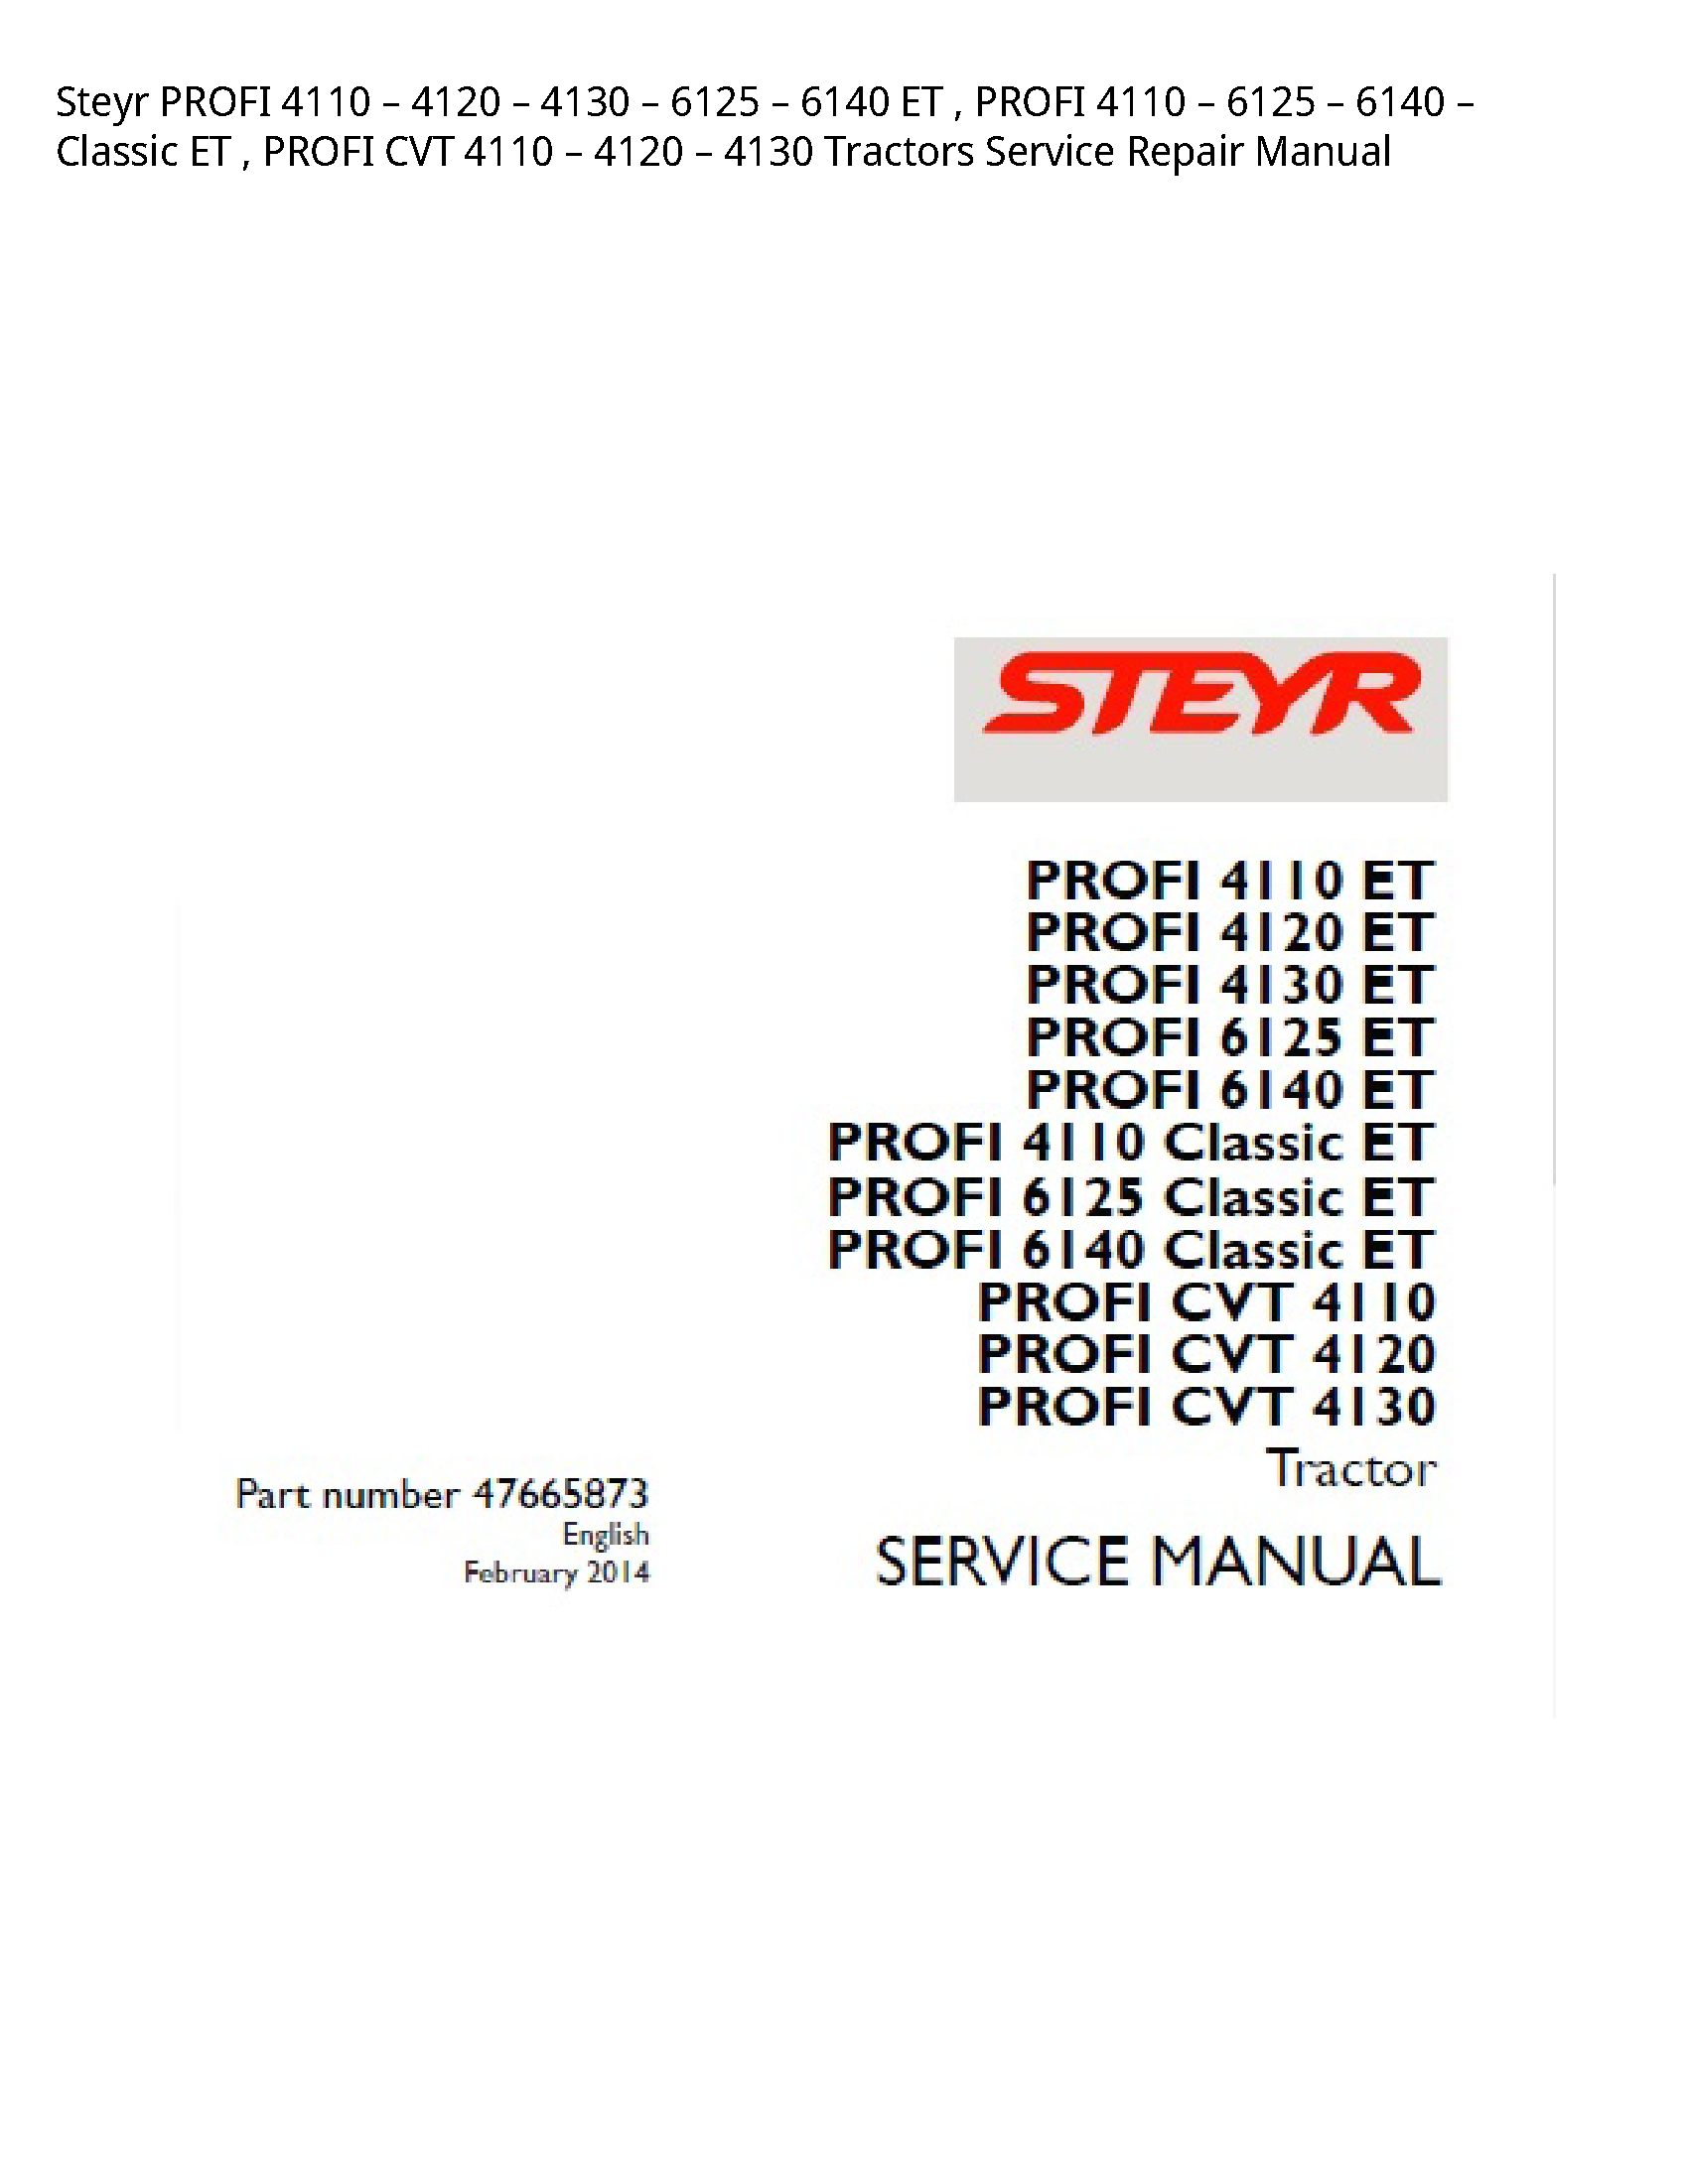 Steyr 4110 PROFI ET PROFI Classic ET PROFI CVT Tractors manual